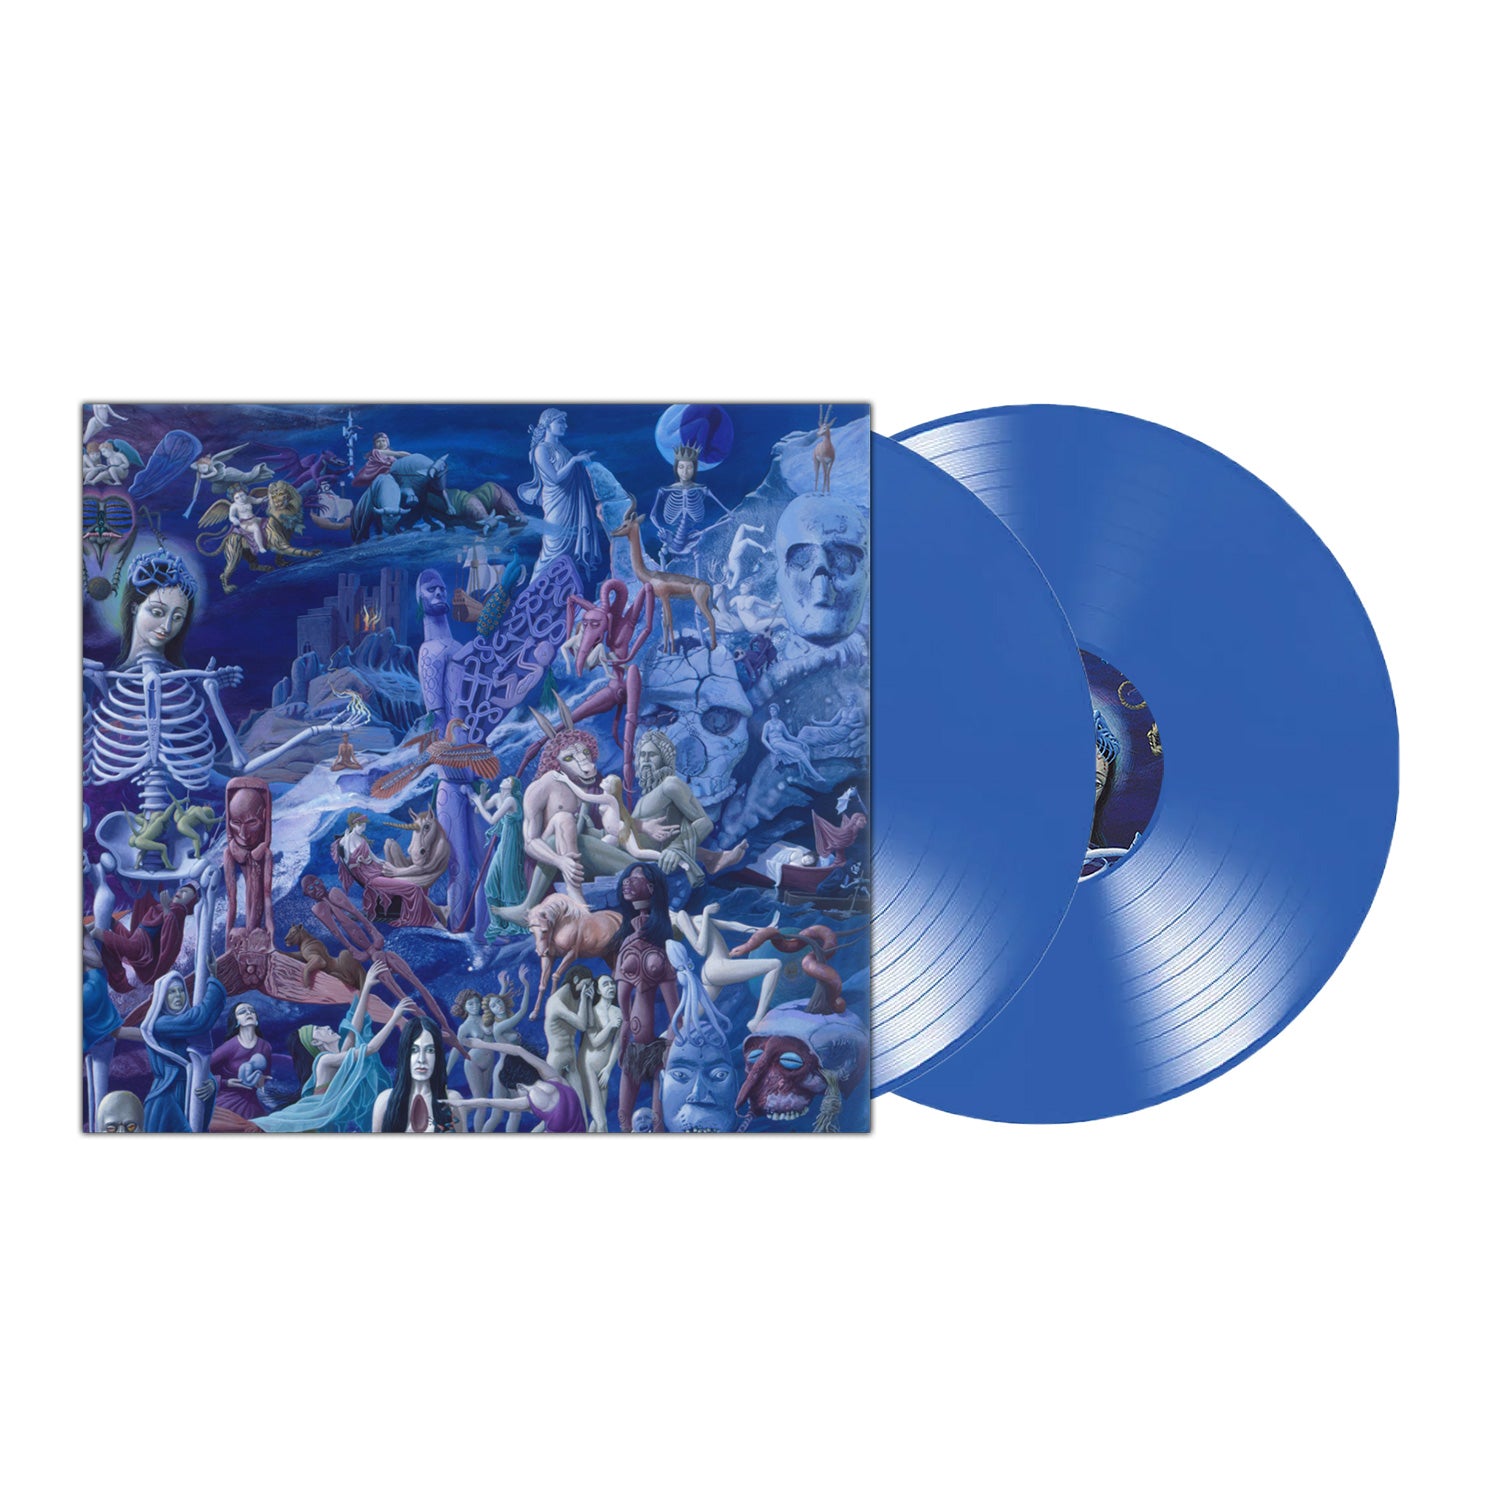 Cathedral "The Carnival Bizarre" Blue Vinyl (Ltd to 300) - PRE-ORDER